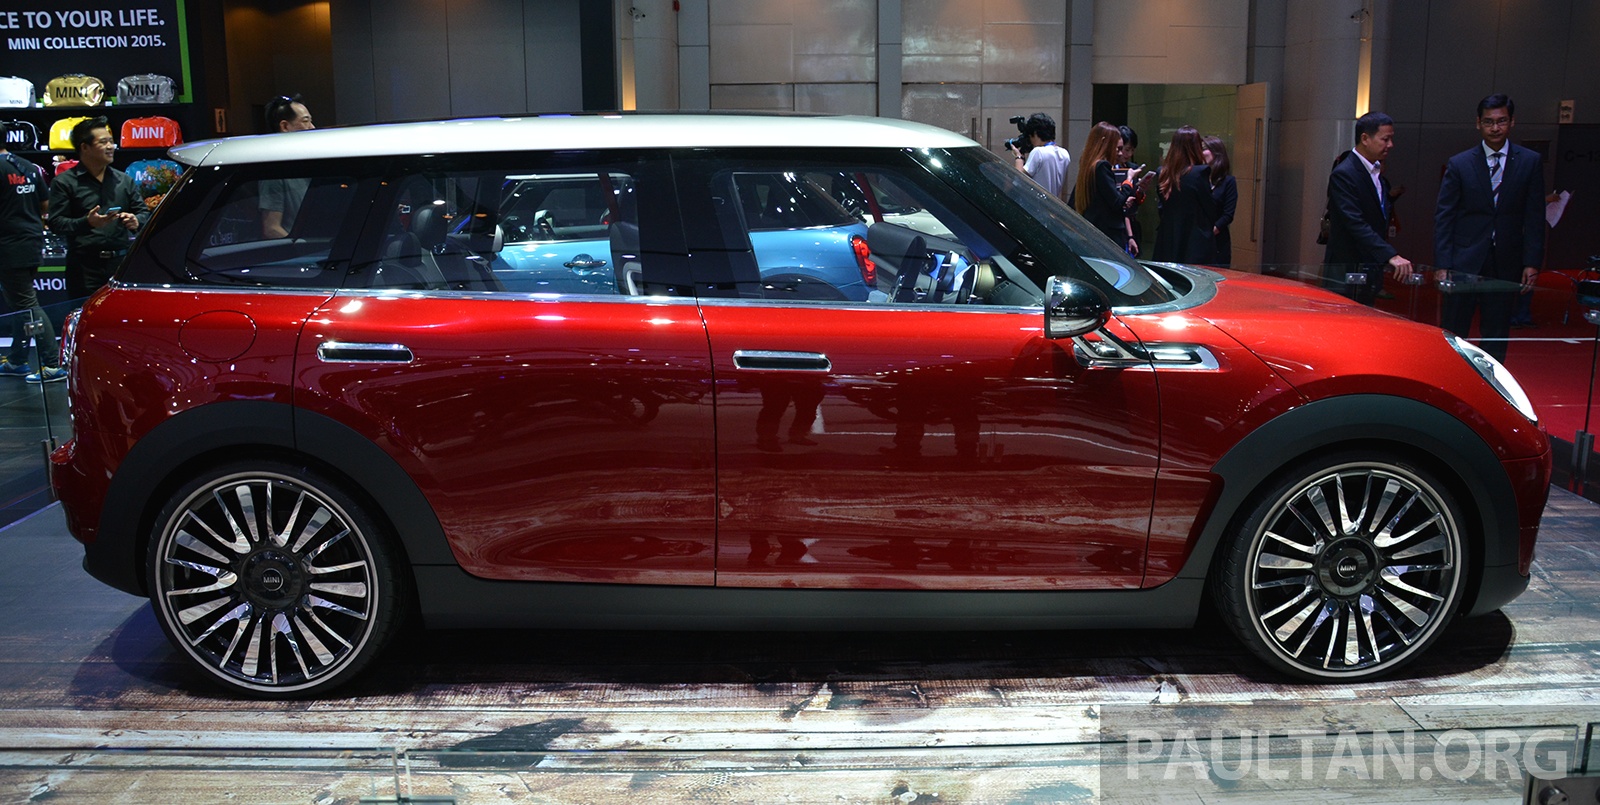 MINI Clubman Concept BKK 2015 2 - Paul Tan's Automotive News